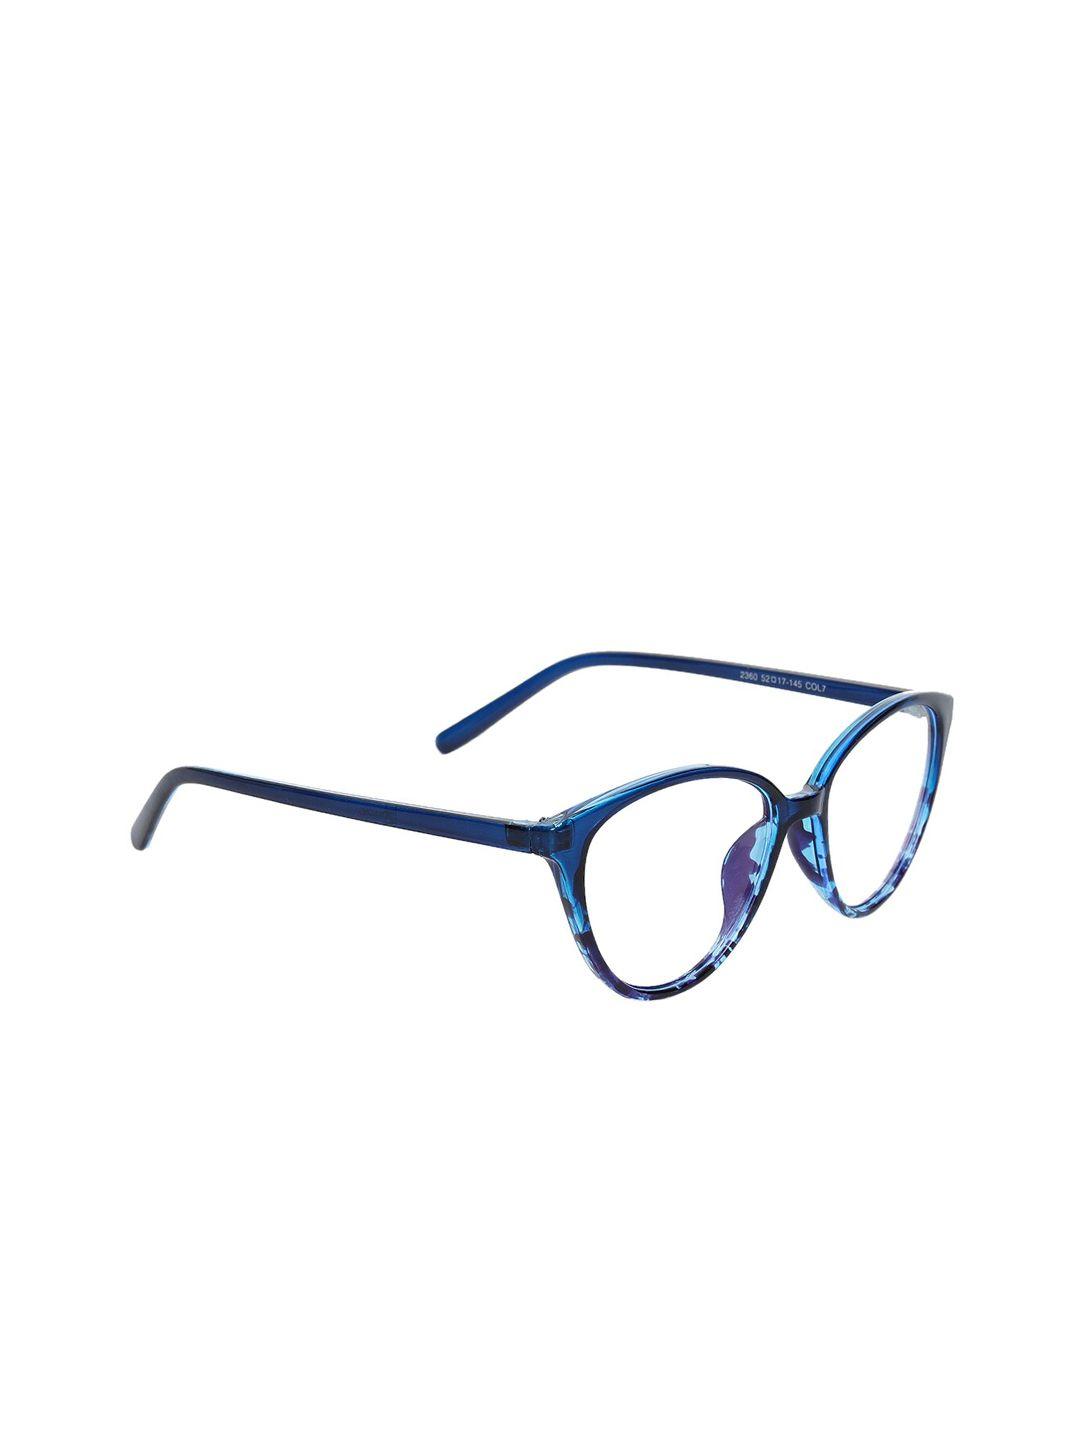 peter jones eyewear unisex blue abstract blue light blocking cateye frames